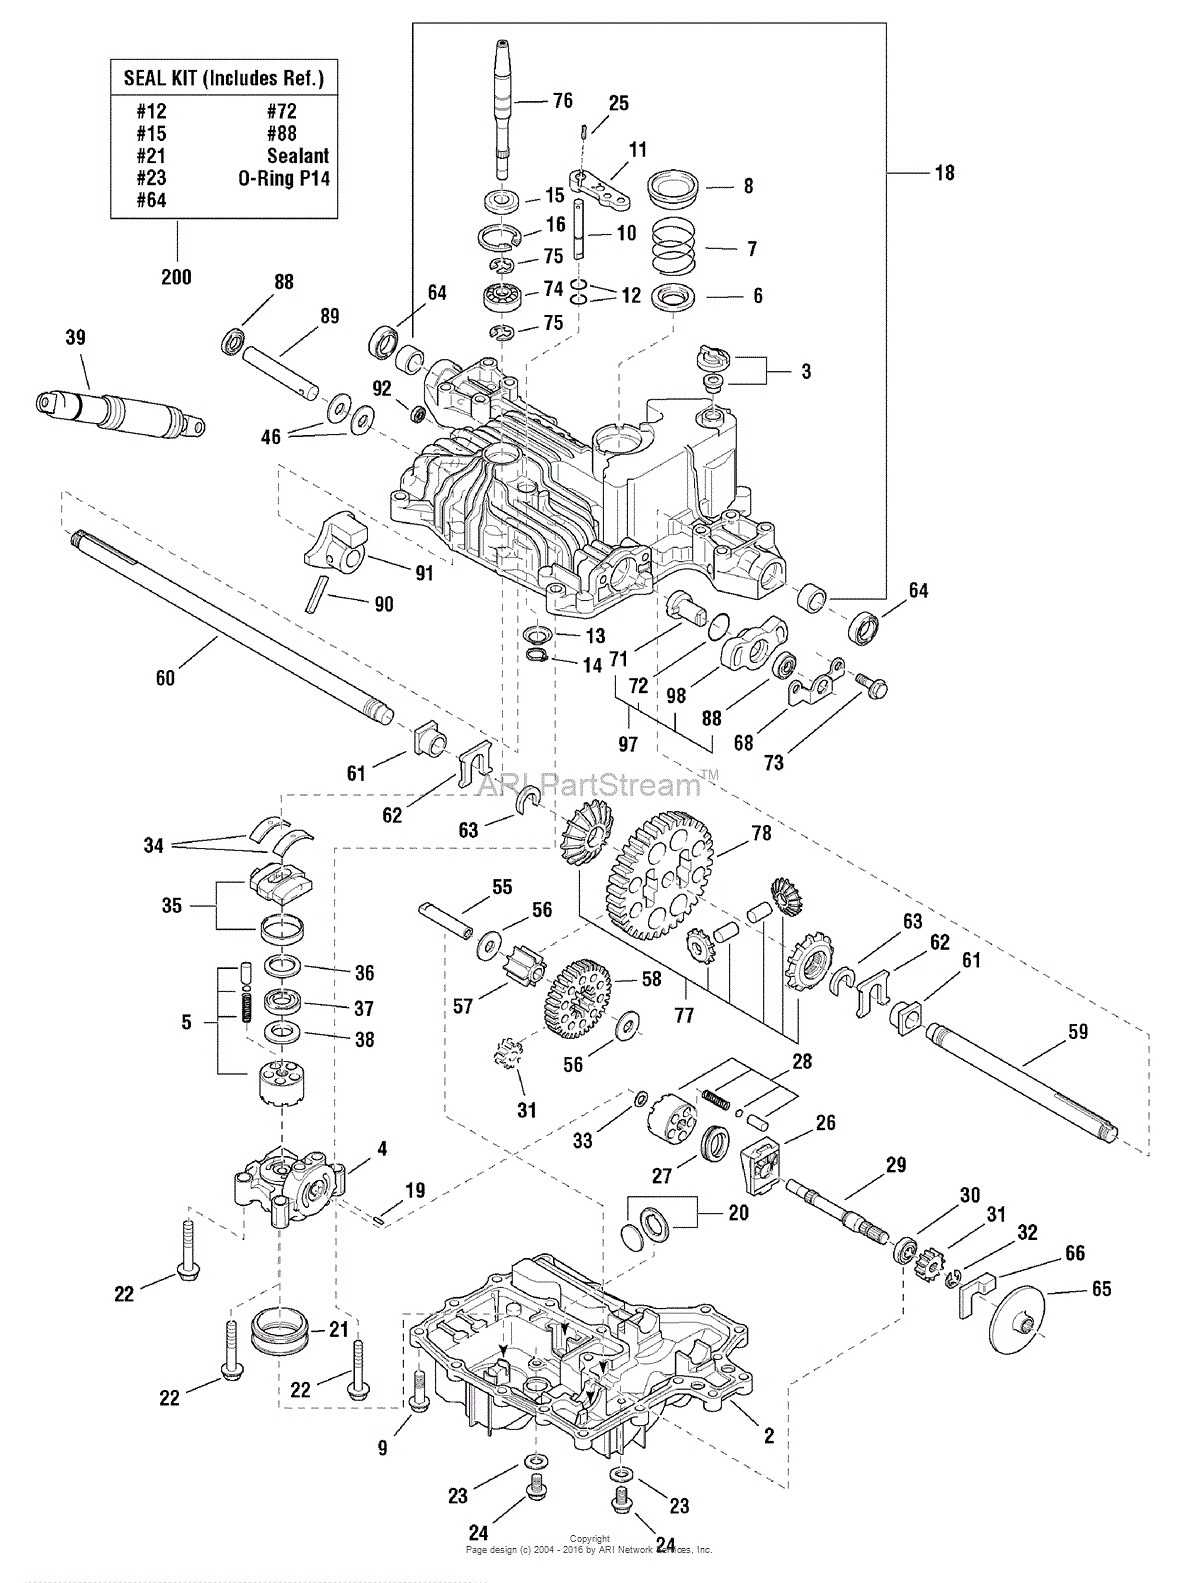 Tuff Torq K46 Parts Diagram Image collections - Diagram ...